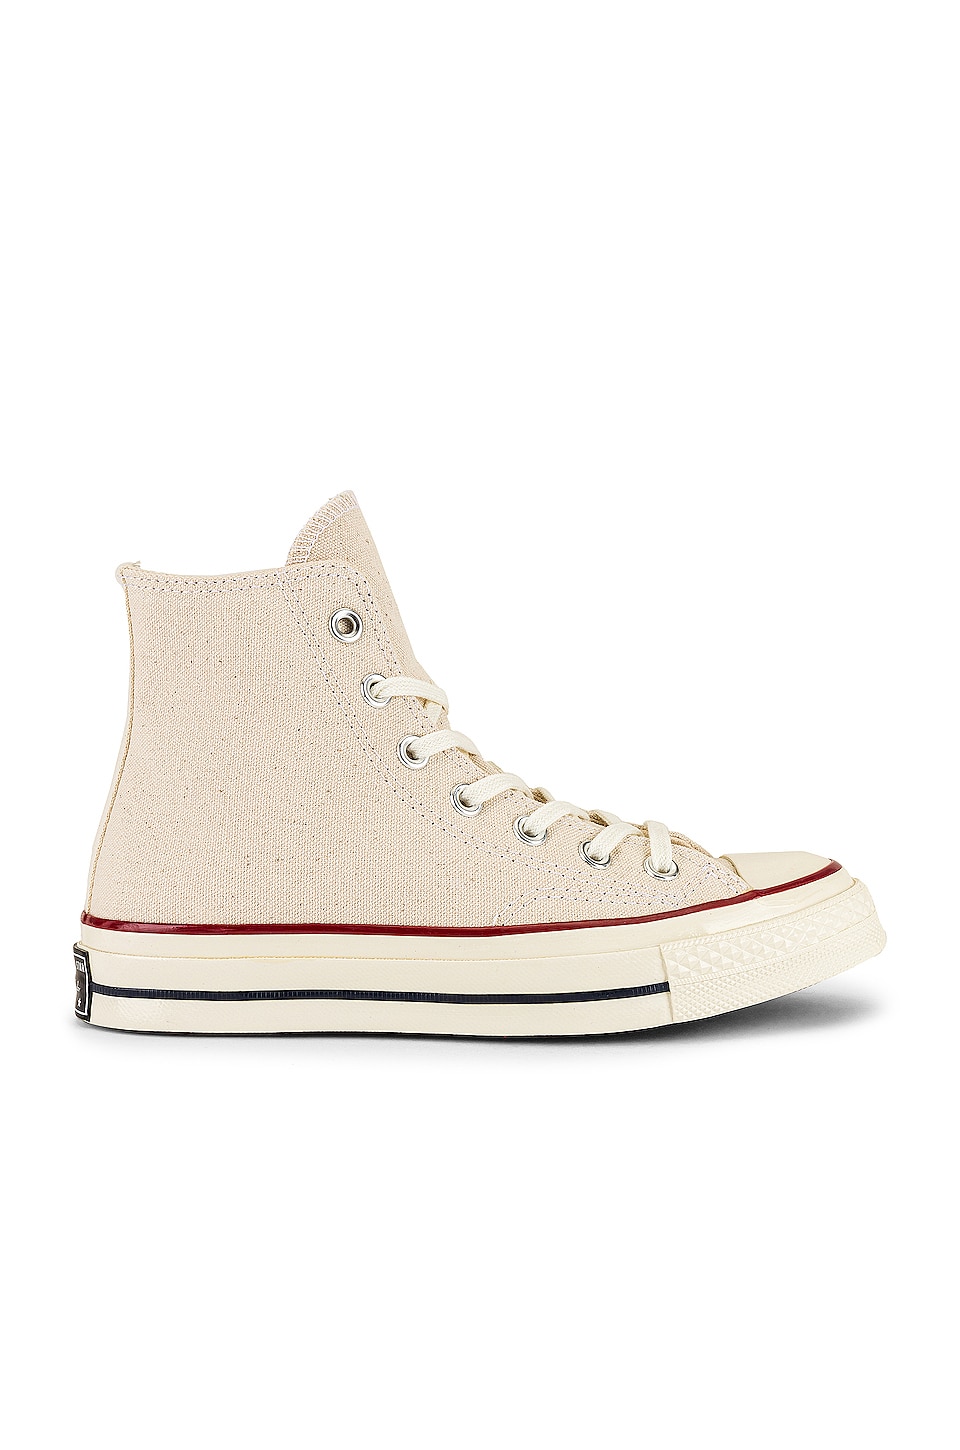 Converse Chuck 70 Hi Sneaker in Parchment, Garnet, & Egret | REVOLVE